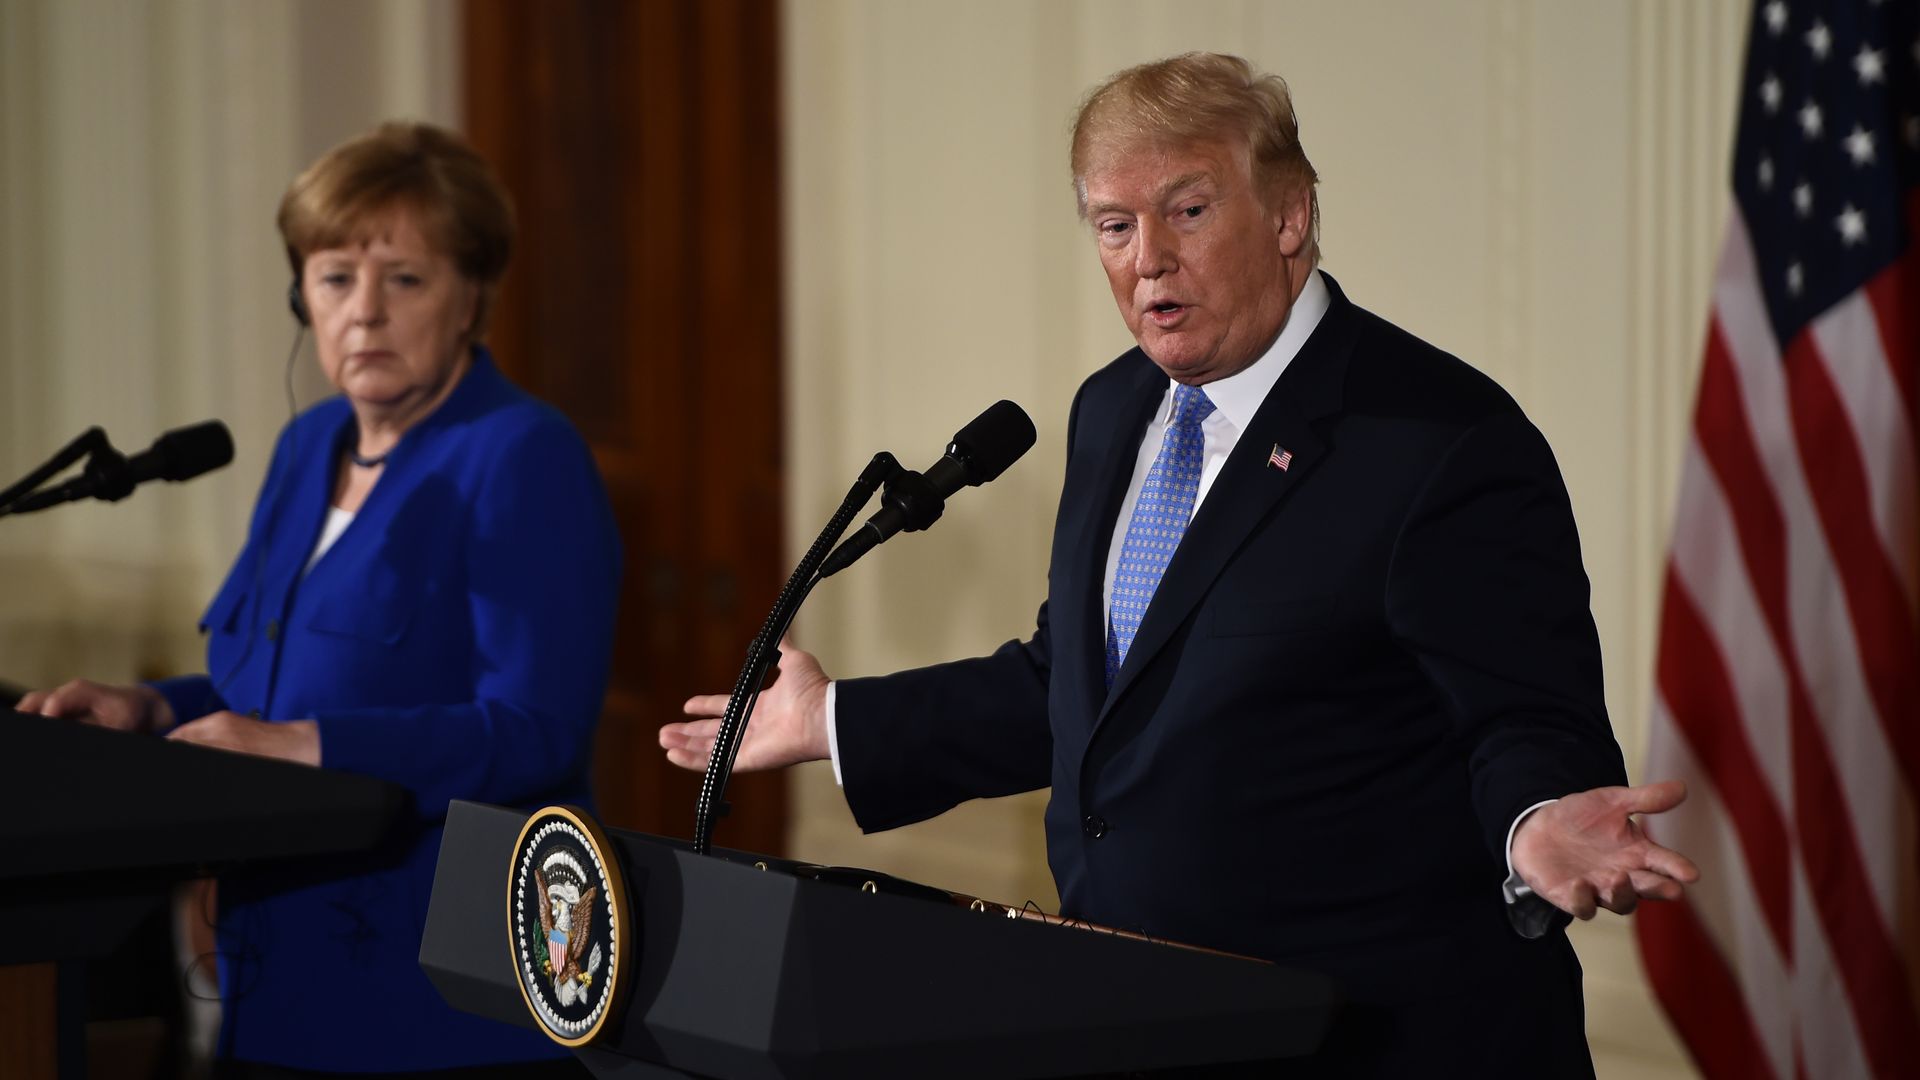 President Trump with German chancellor Angela Merkel